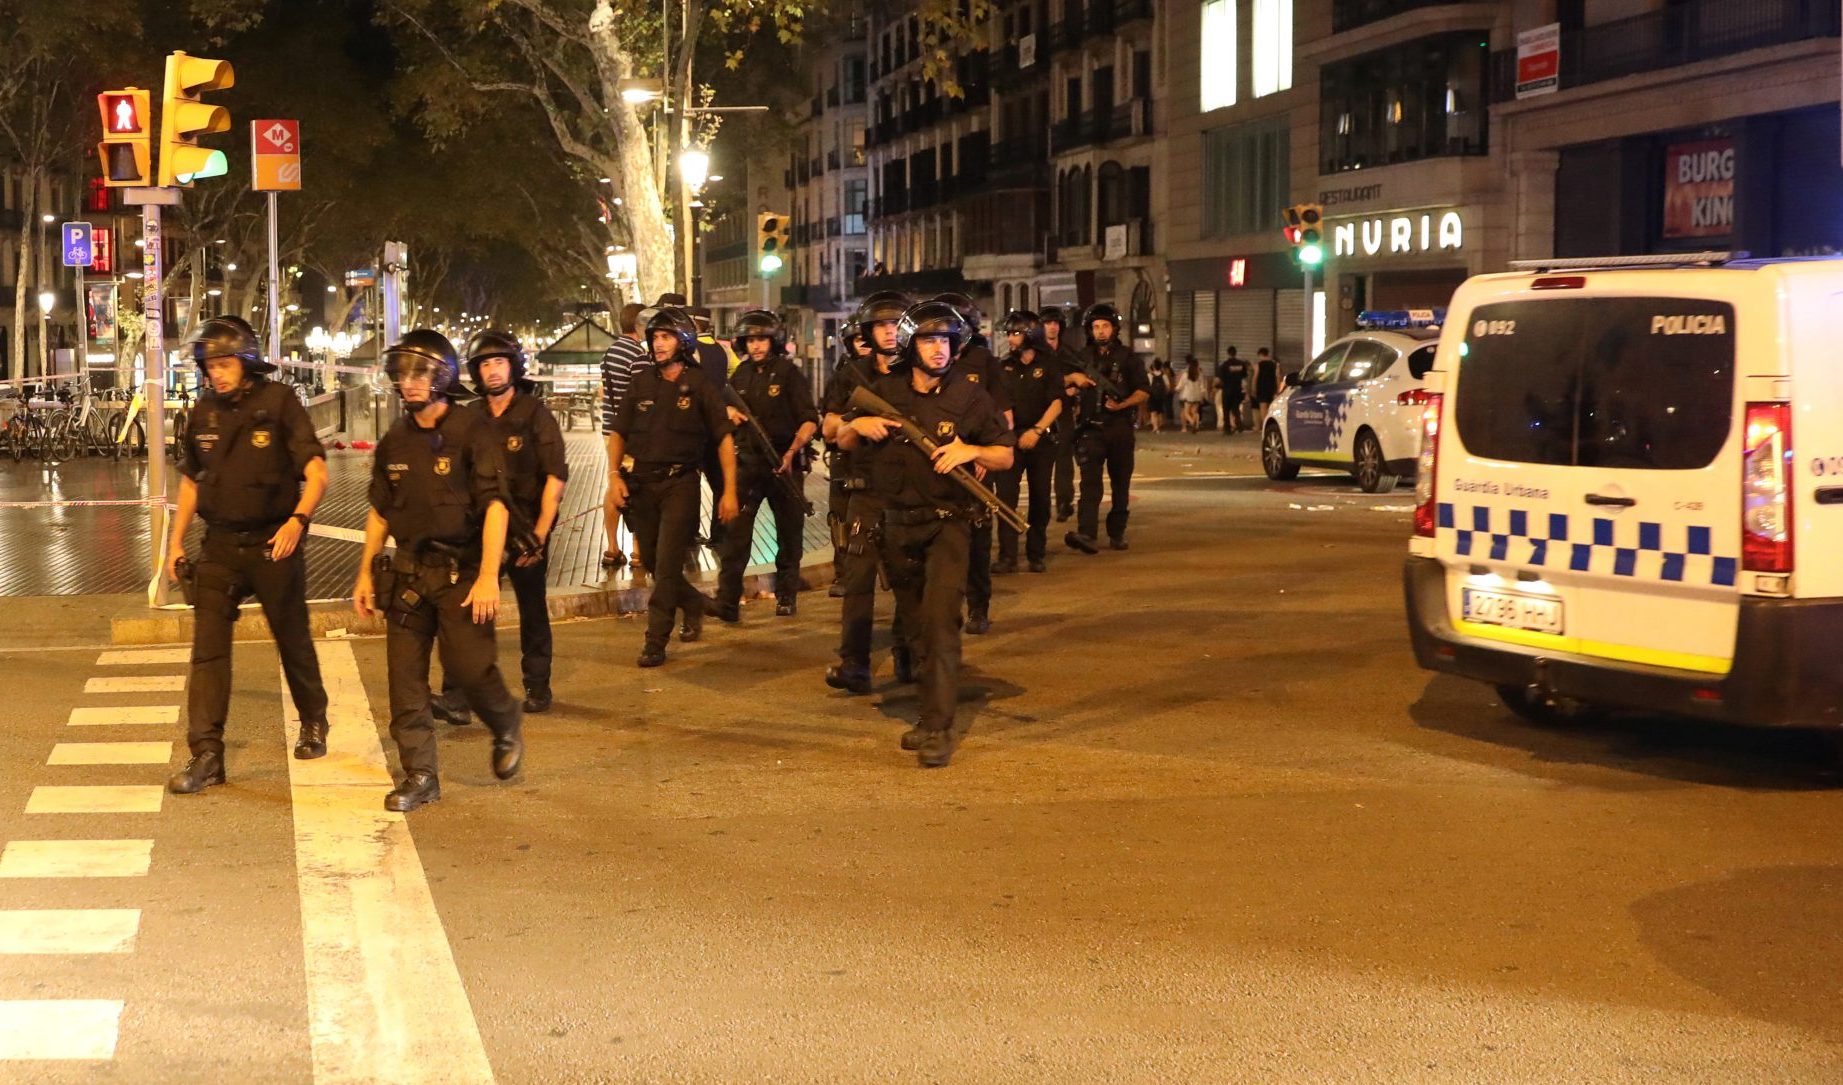 Armed Catalonian Mosses de Escuadra officers leave the area where a van crashed into pedestrians at Las Ramblas in Barcelona | REUTERS